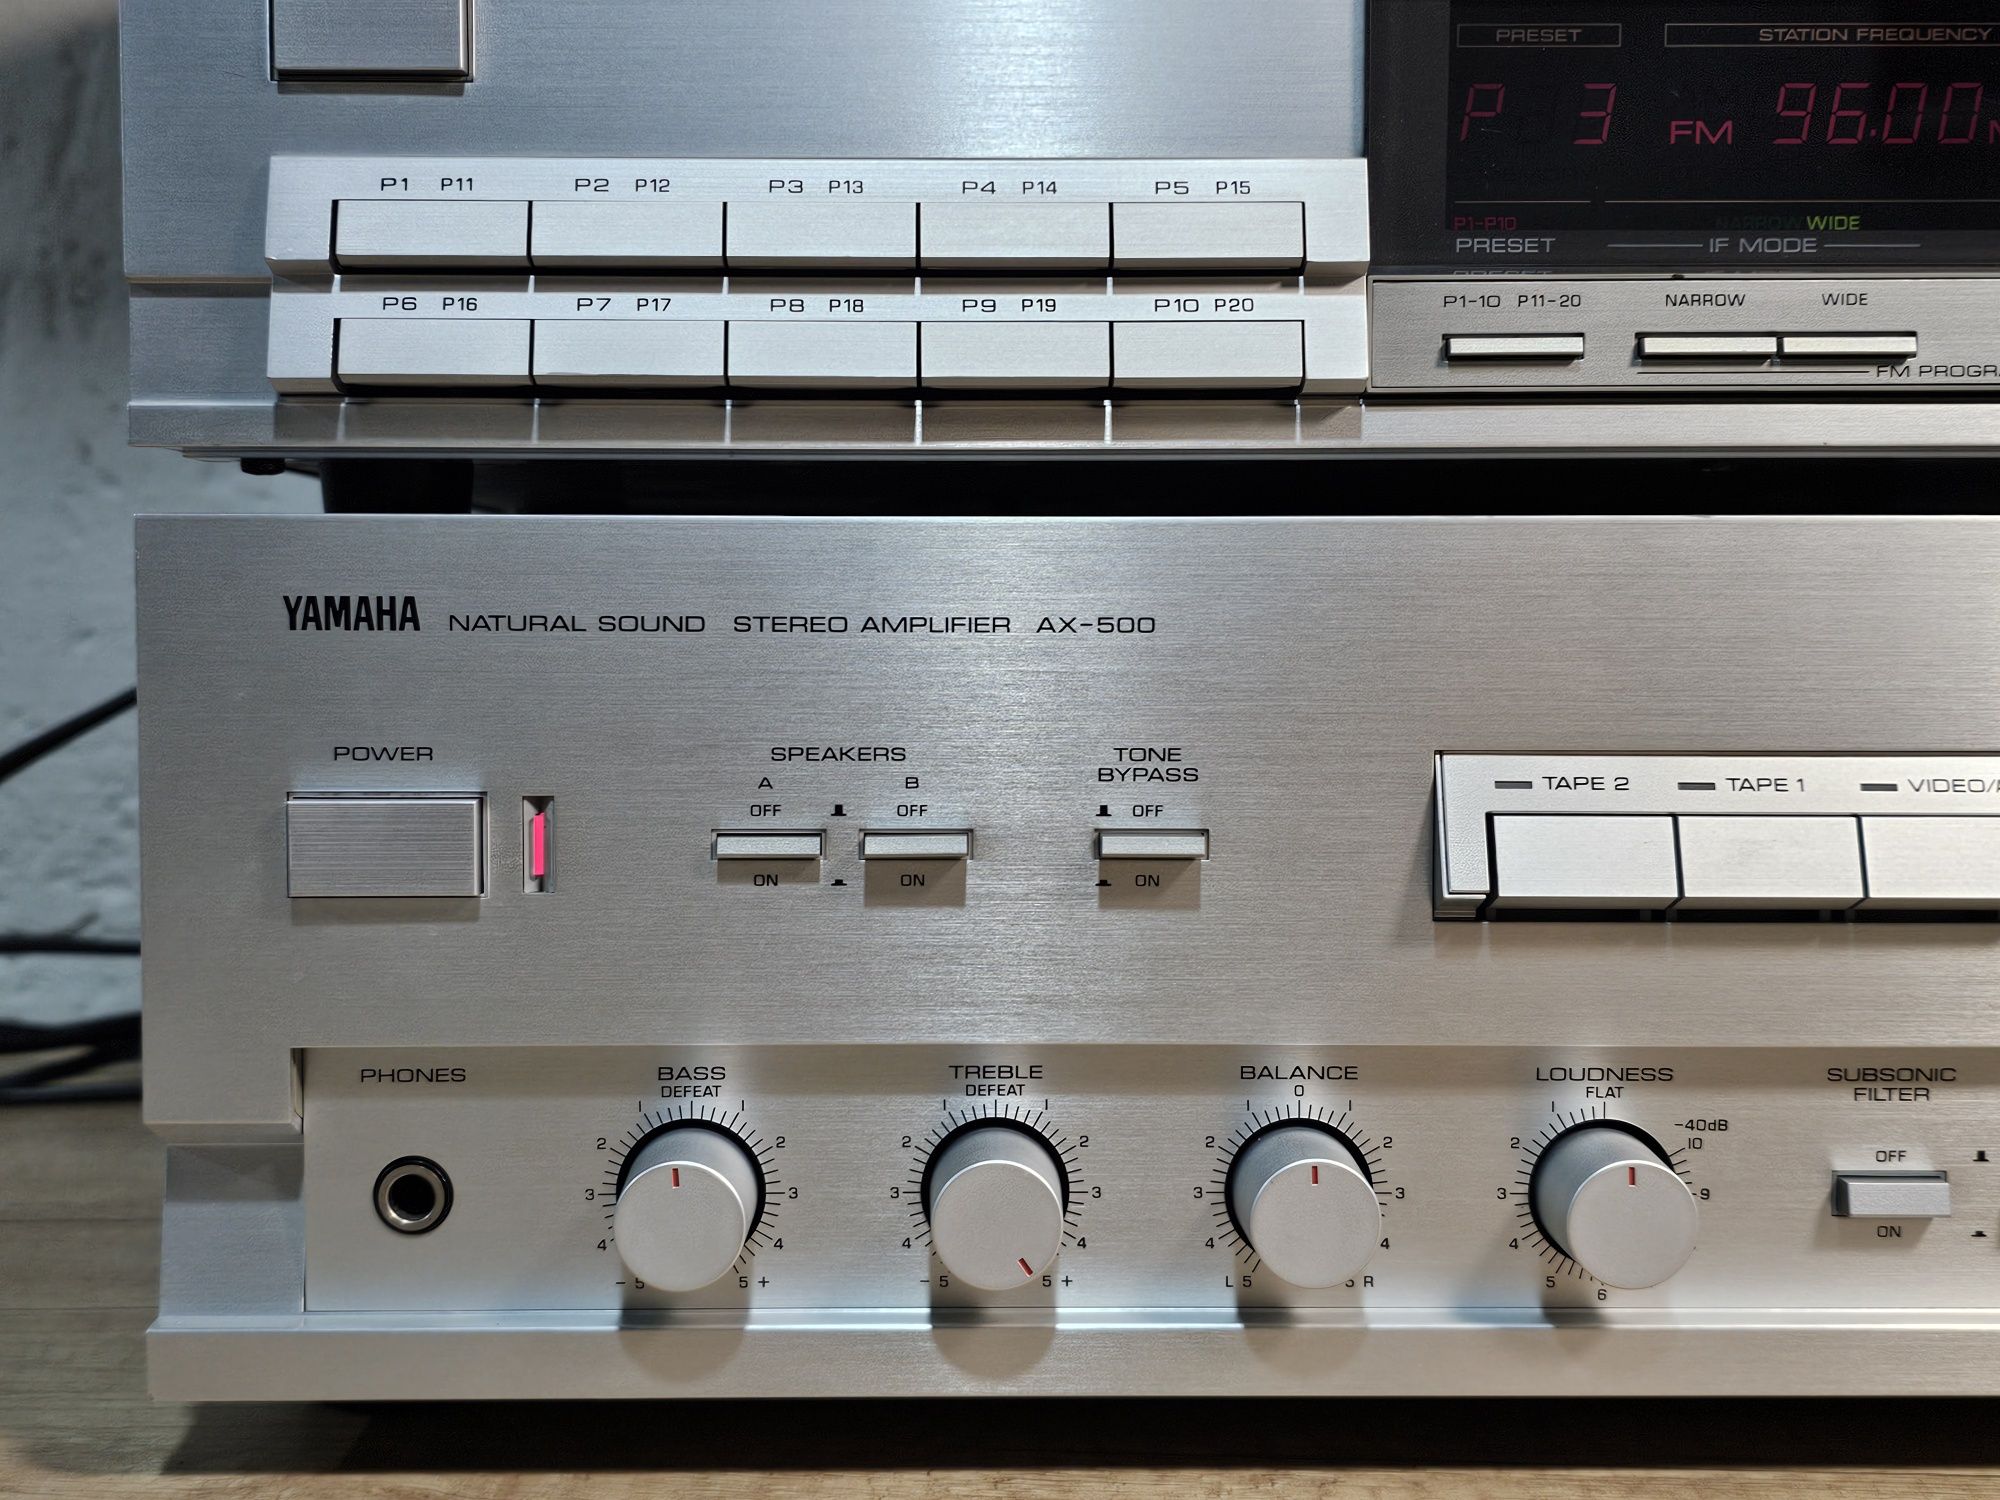 linie audio YAMAHA,amplificator AX-500,tuner TX-500,deck KX-200, hi-fi